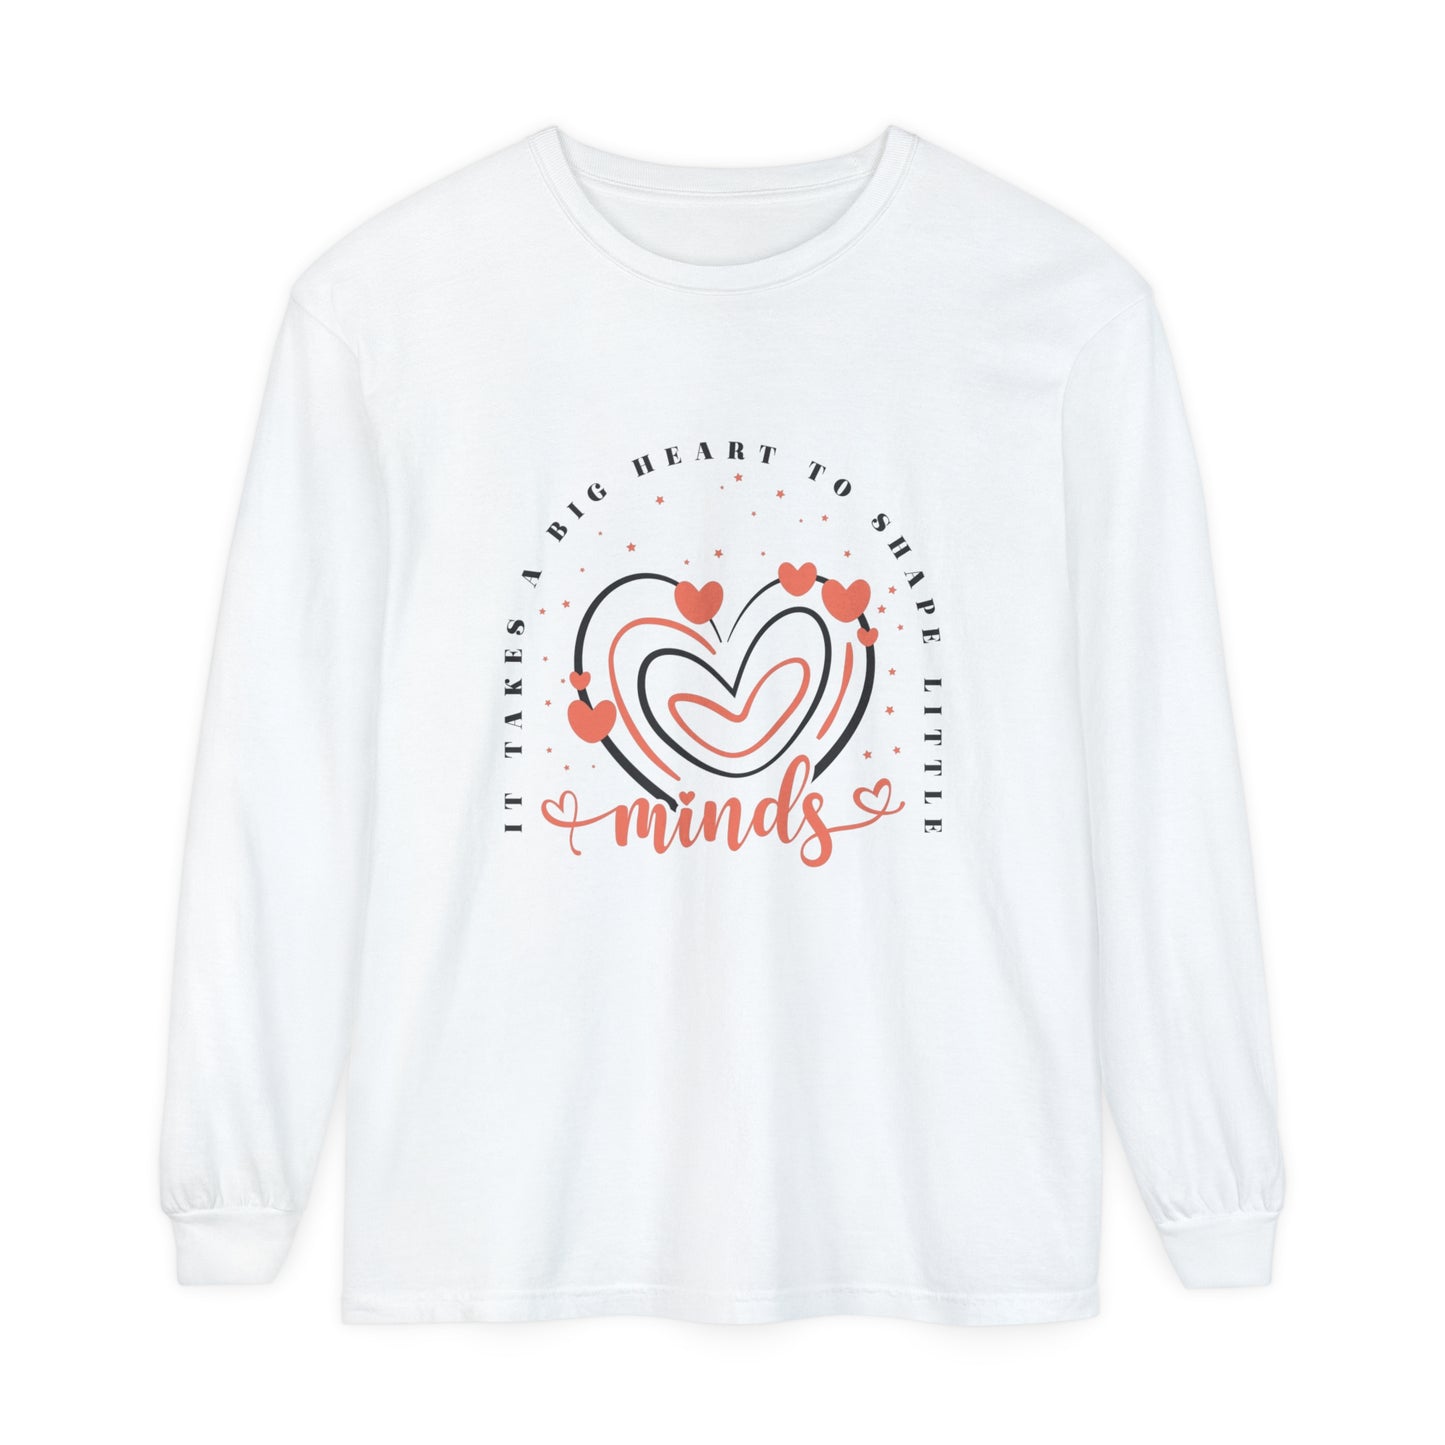 It takes a big heart to shape little minds <3 Women's Long Sleeve T-Shirt